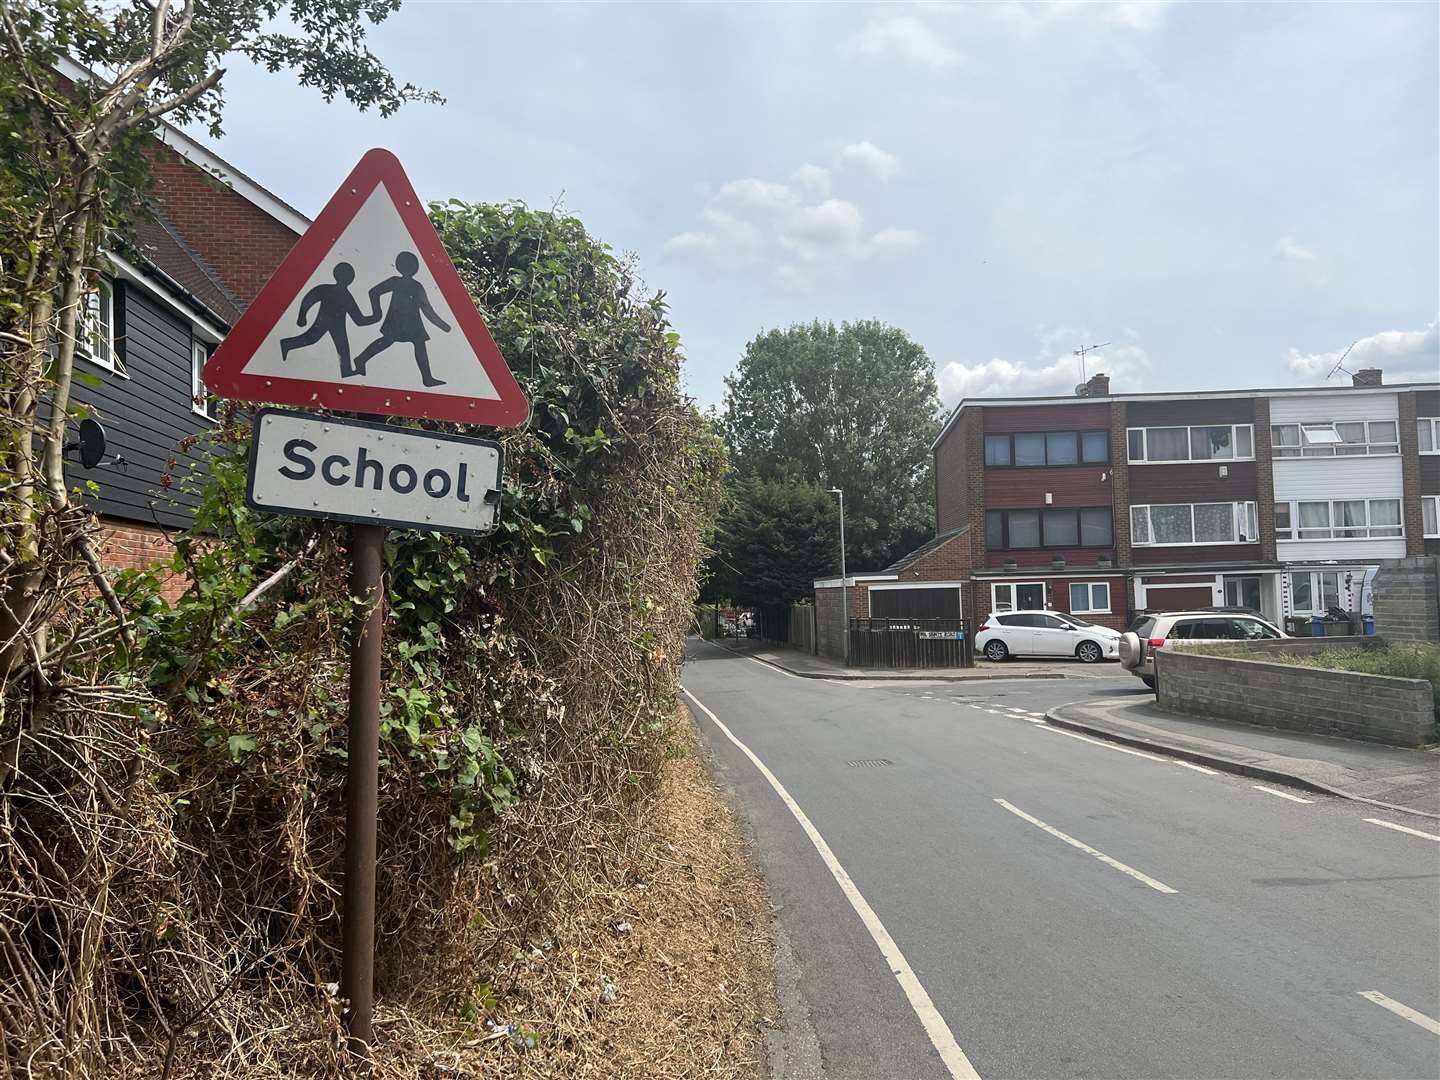 The school crossing sign along Tonge Road, Murston